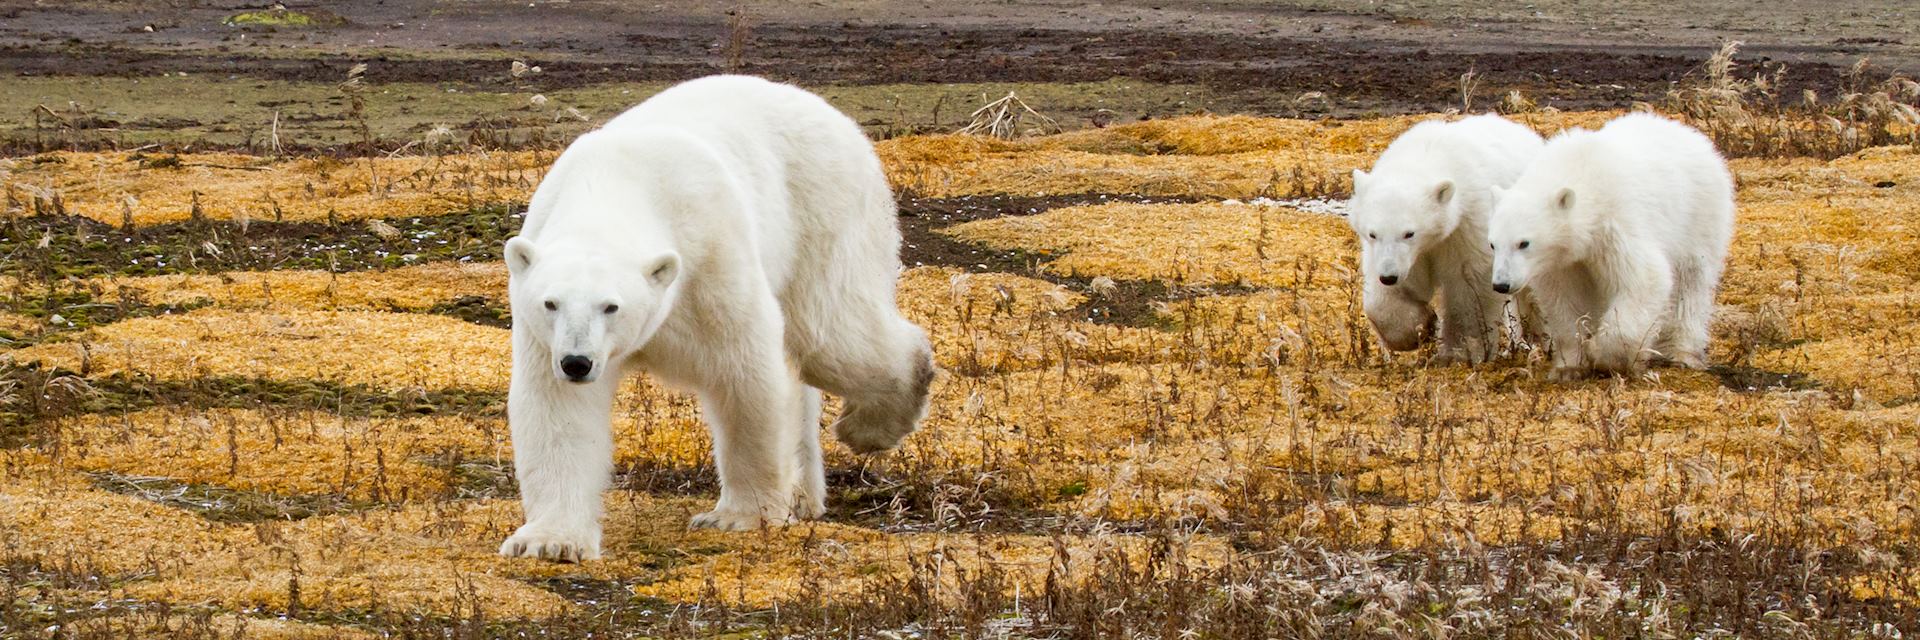 Polar bears in Churchill, Manitoba 